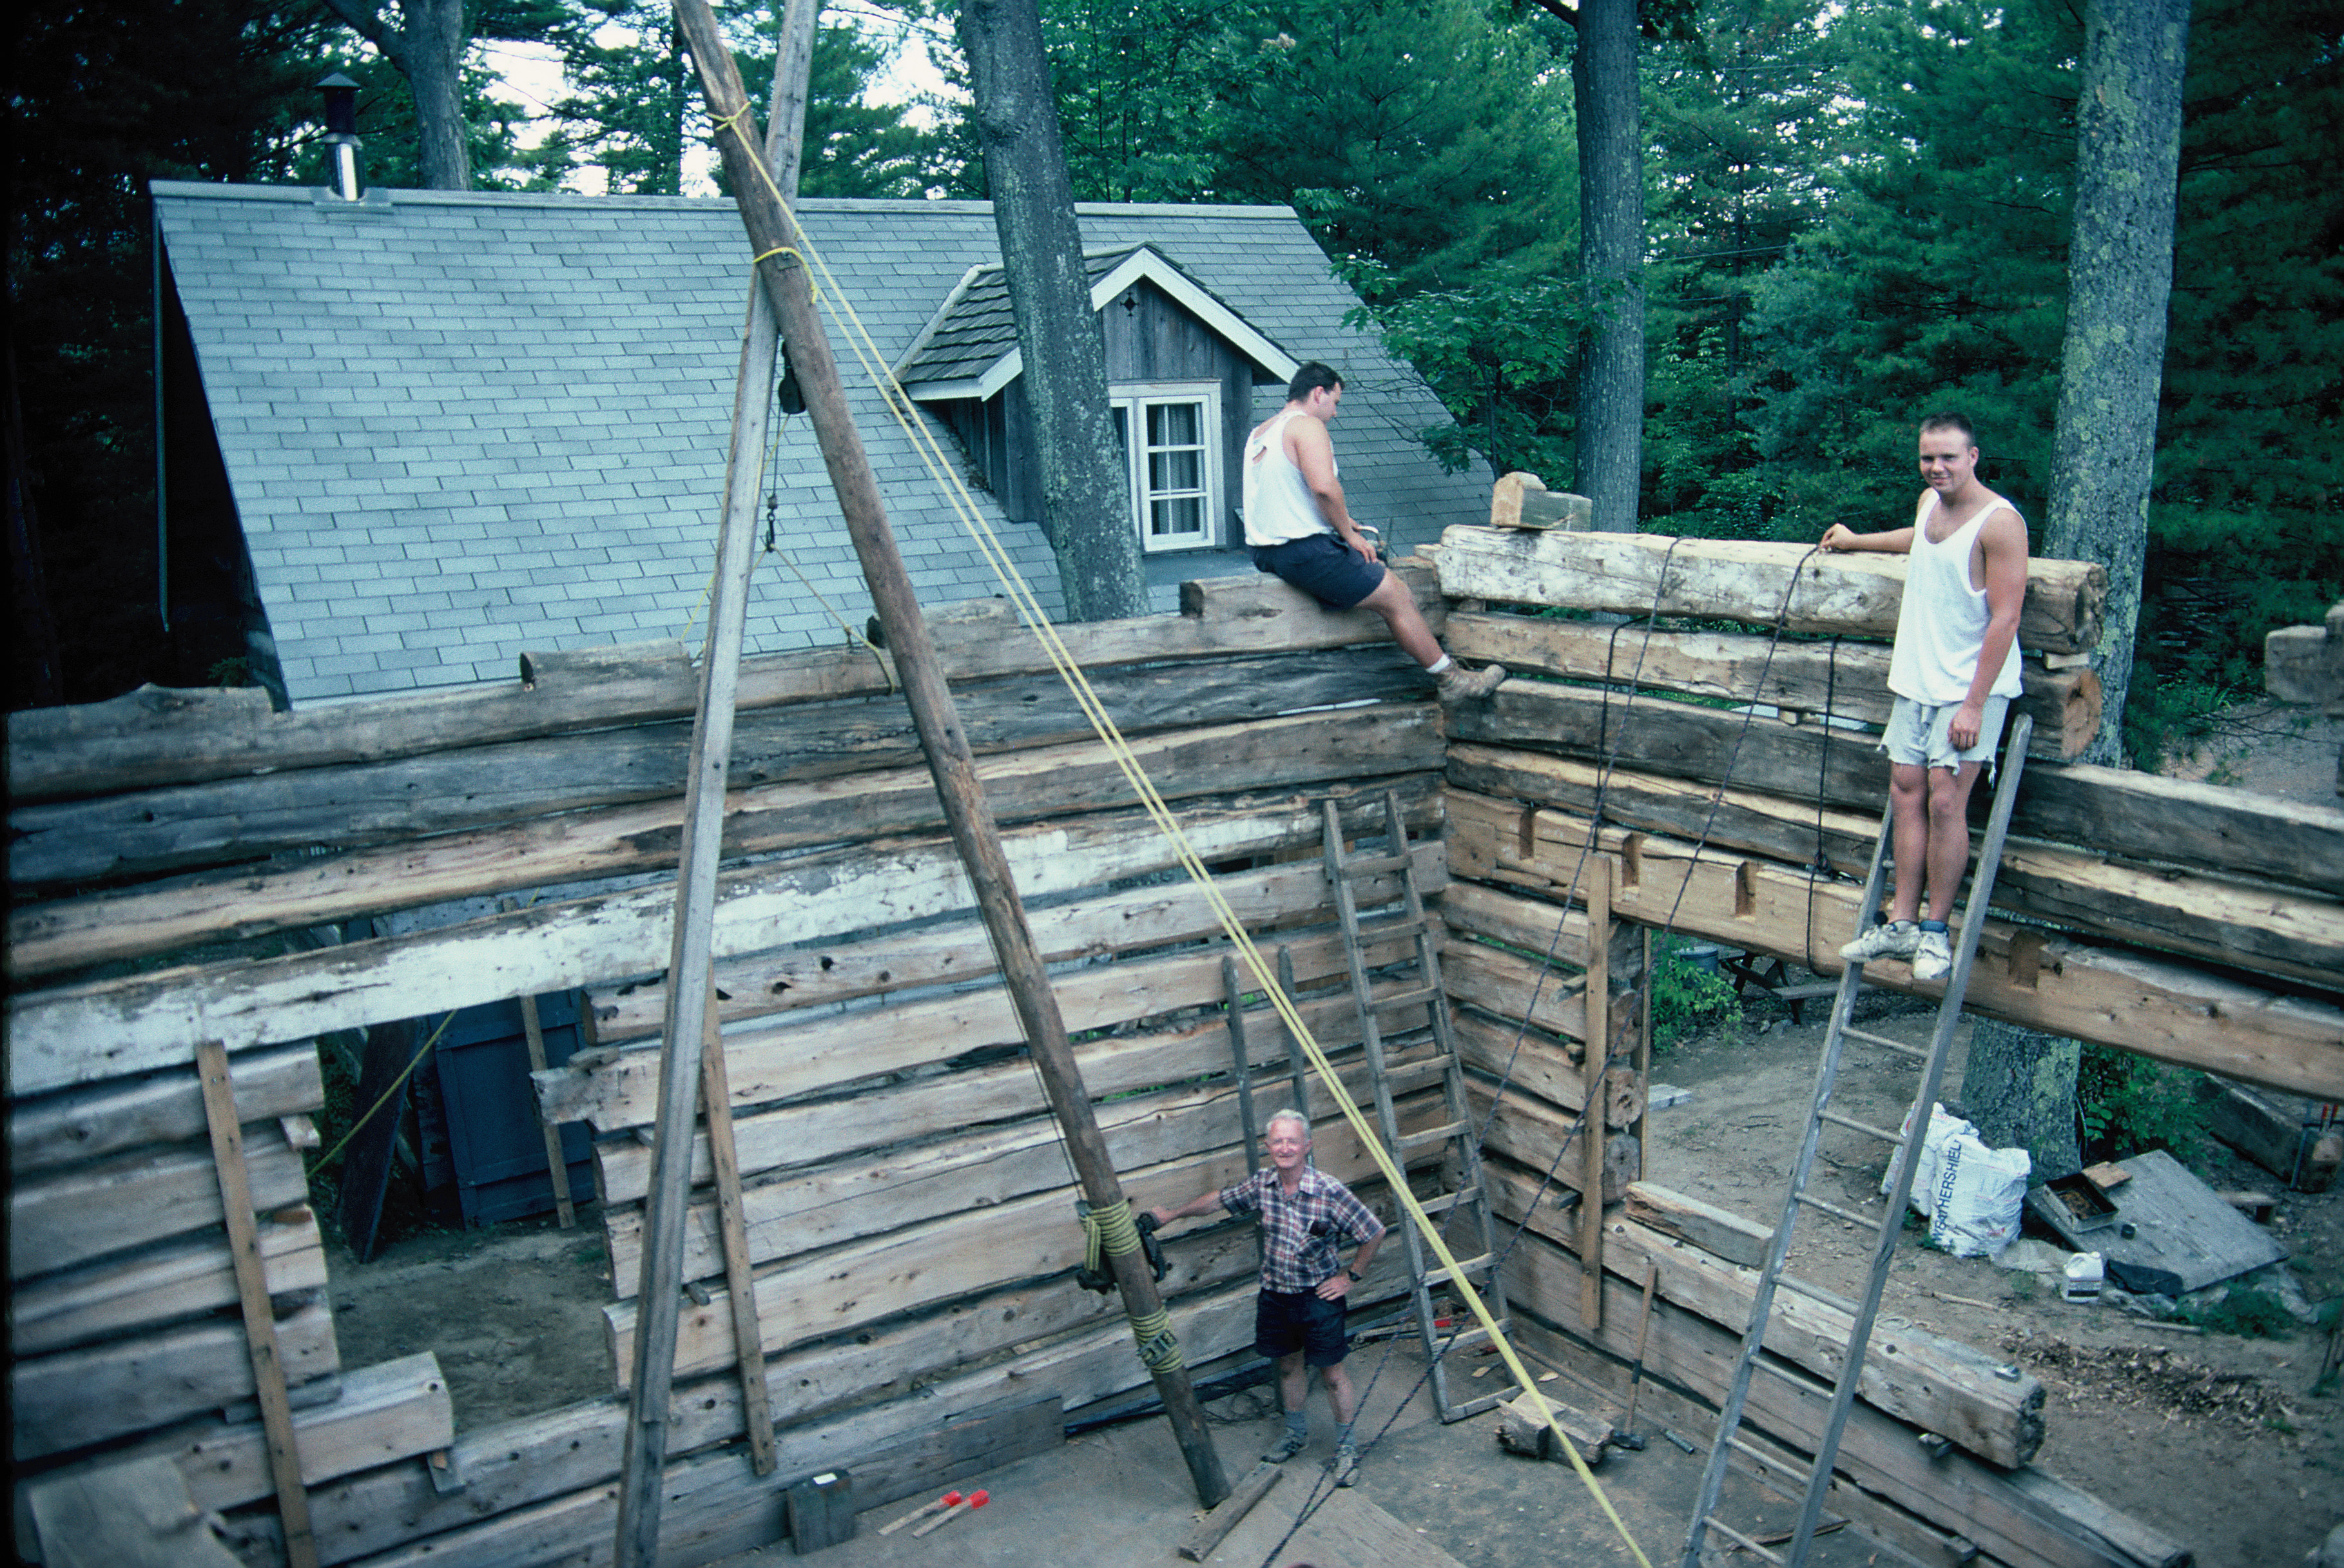 Re-assembling the log house